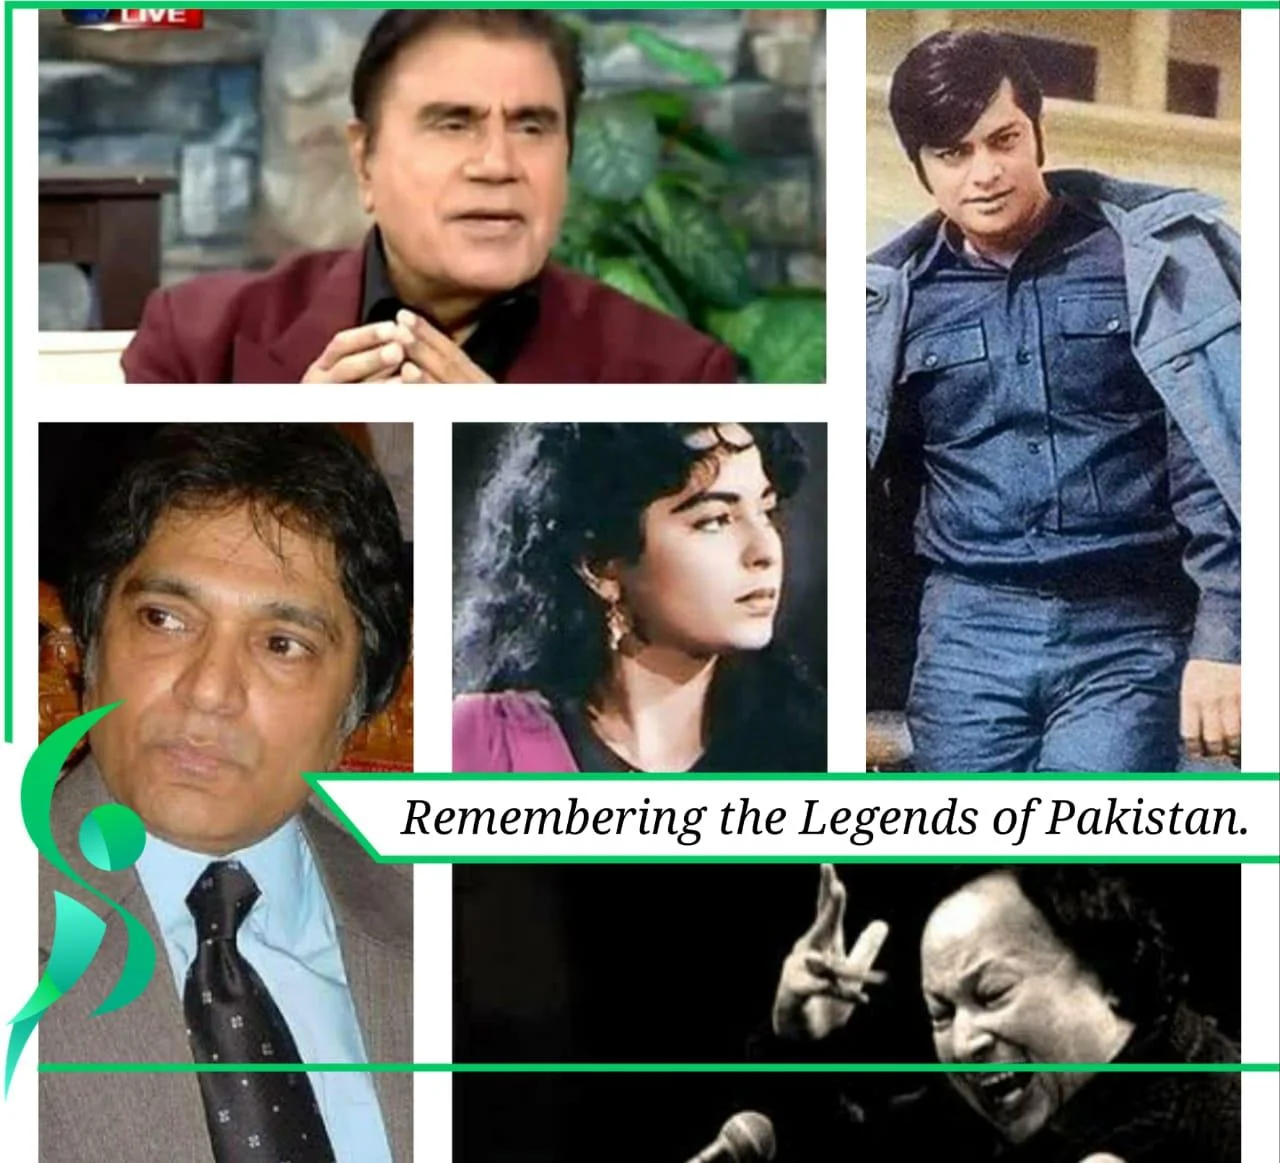 The legends of Pakistan